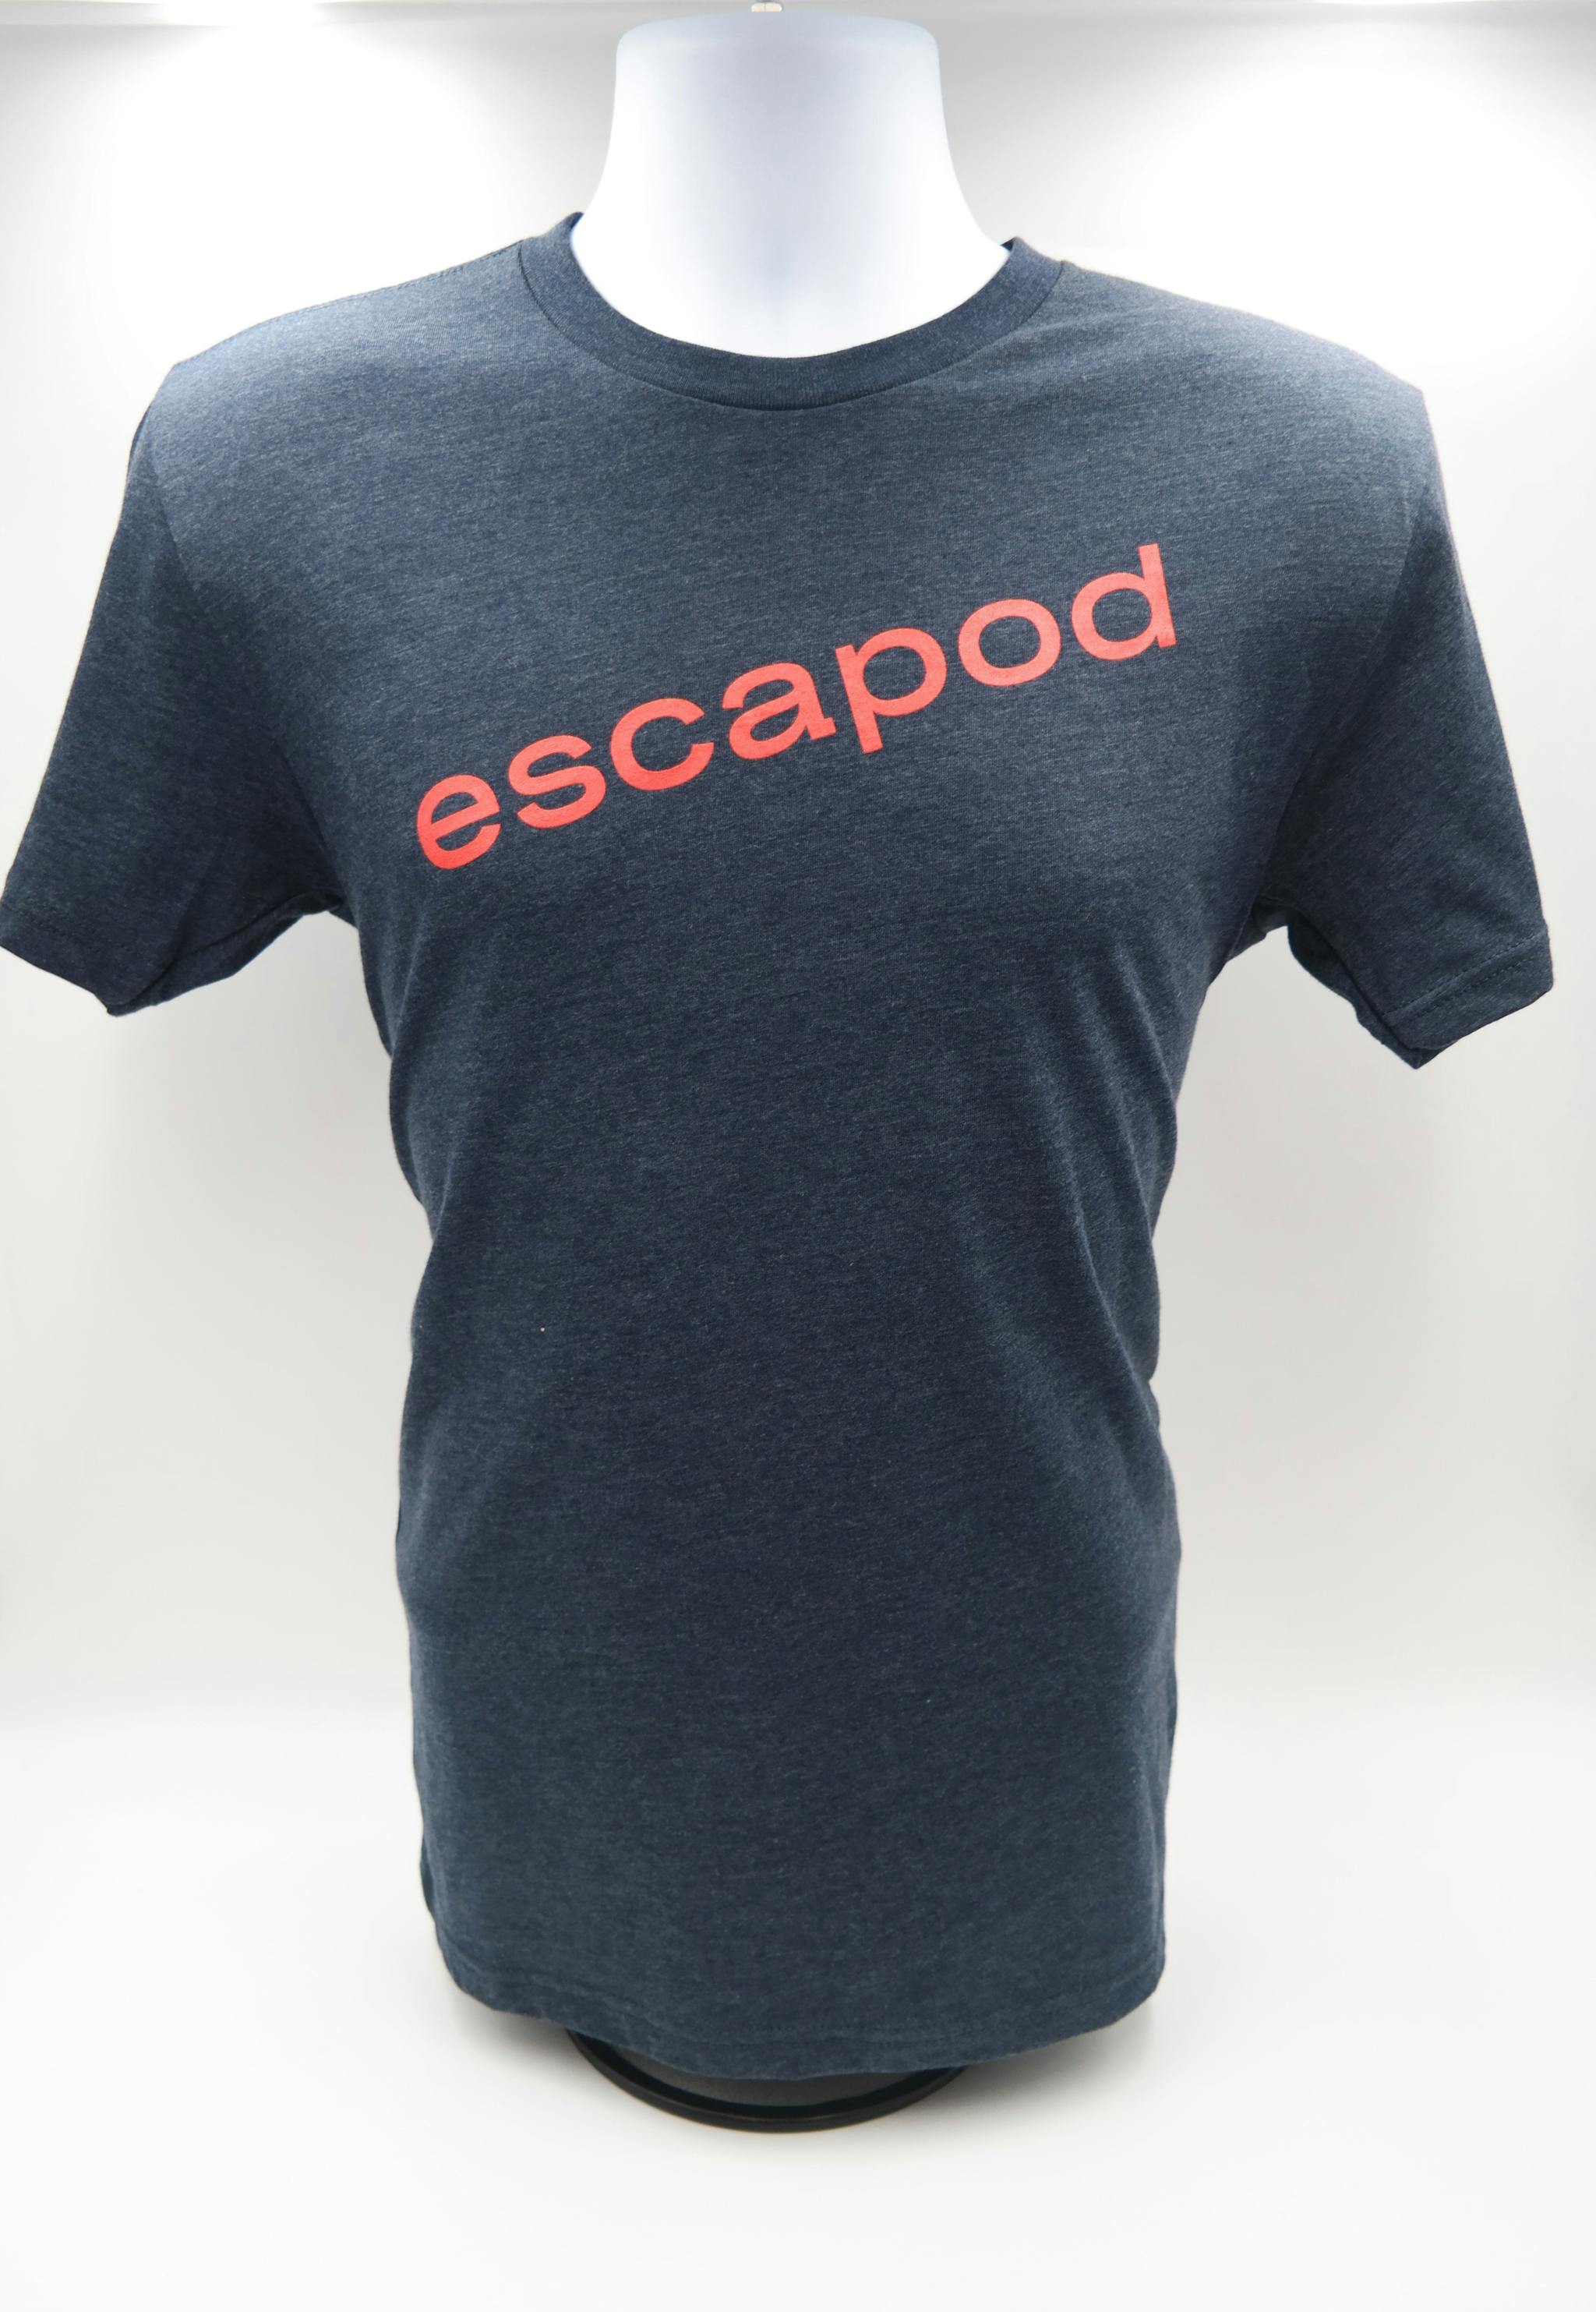 Women's Simple 'escapod' Navy T-Shirt